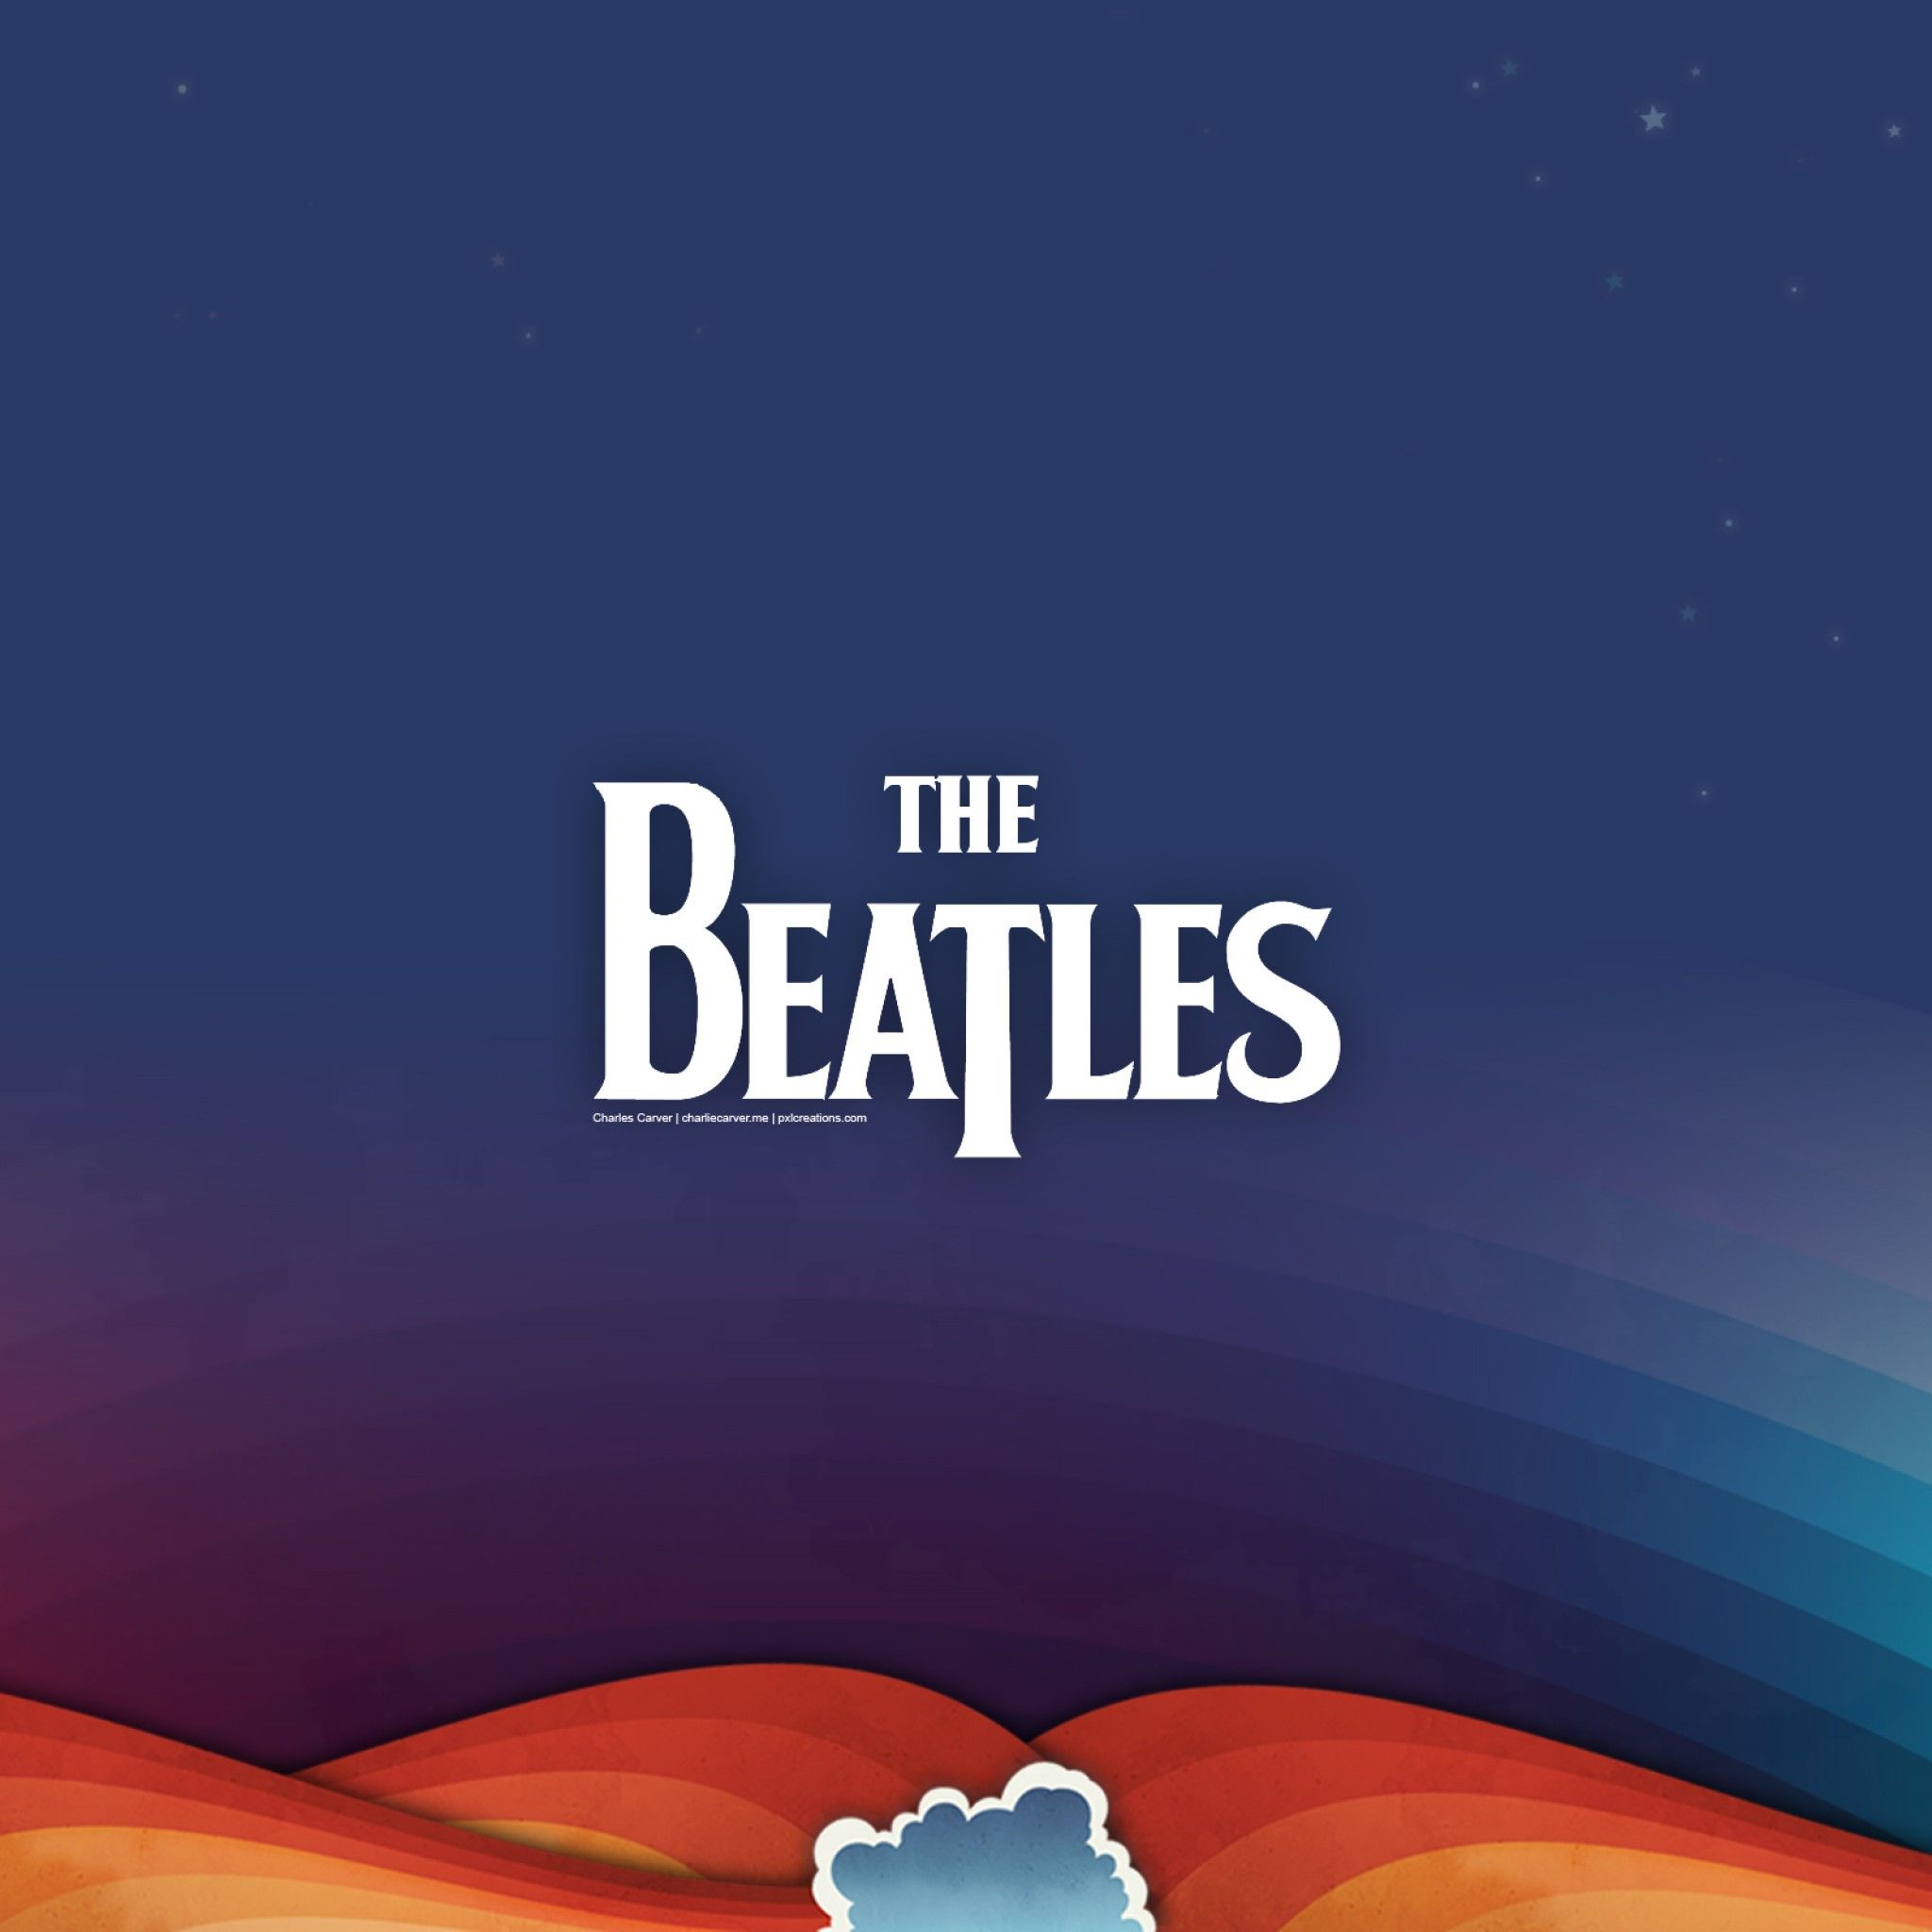 The Beatles Wallpaper 4K, Rock band, Illustration, Music